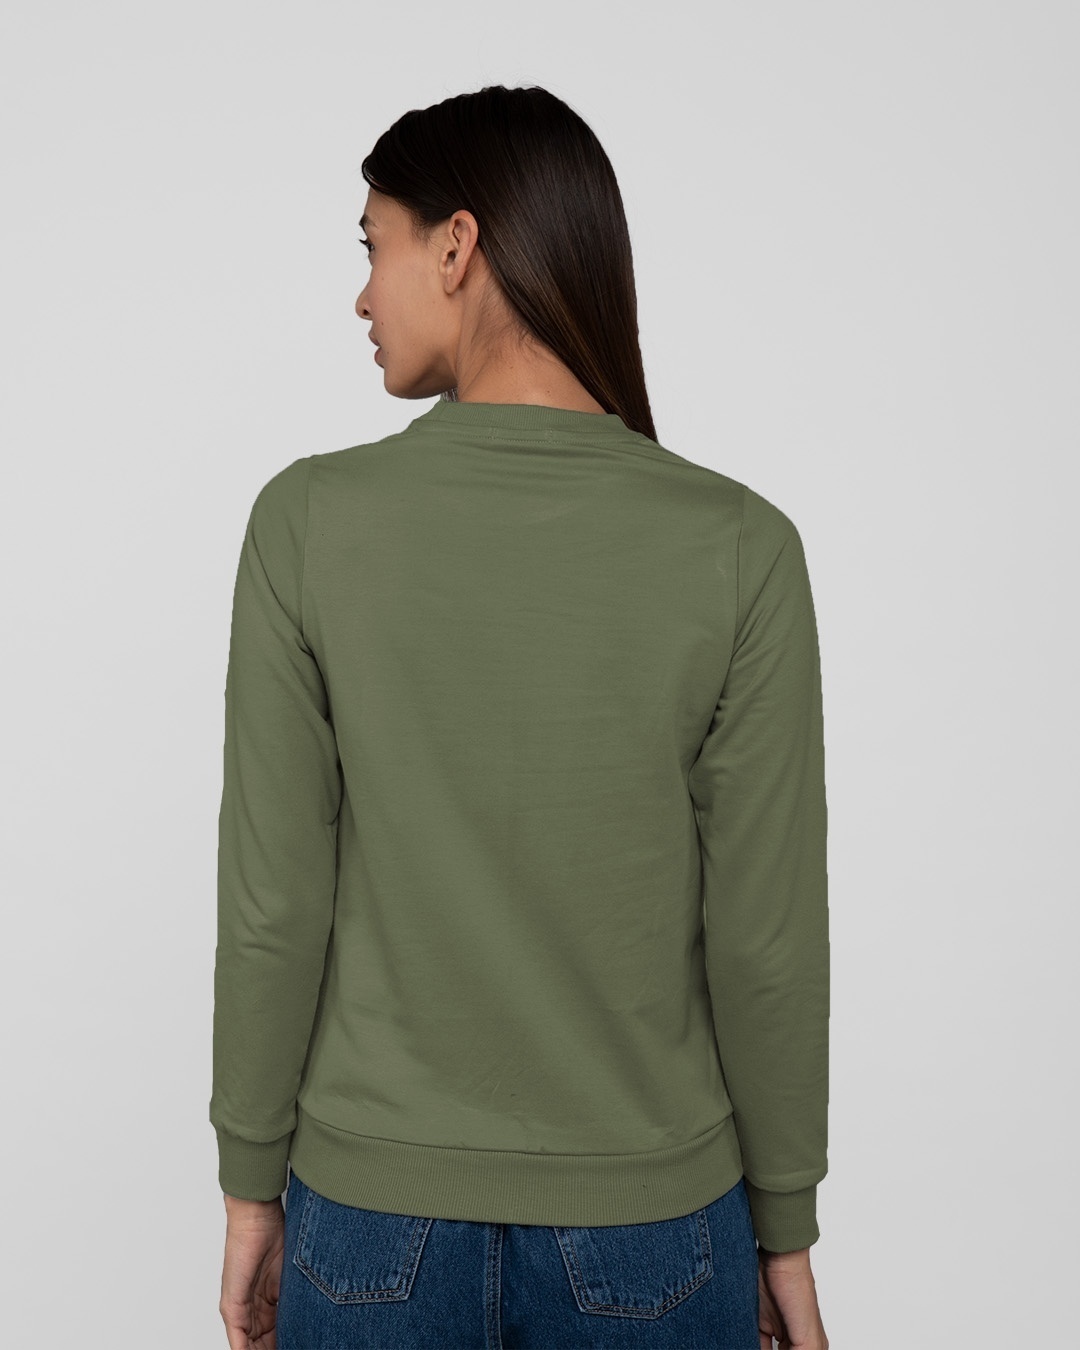 Shop Alpha Green Fleece Sweatshirt-Design